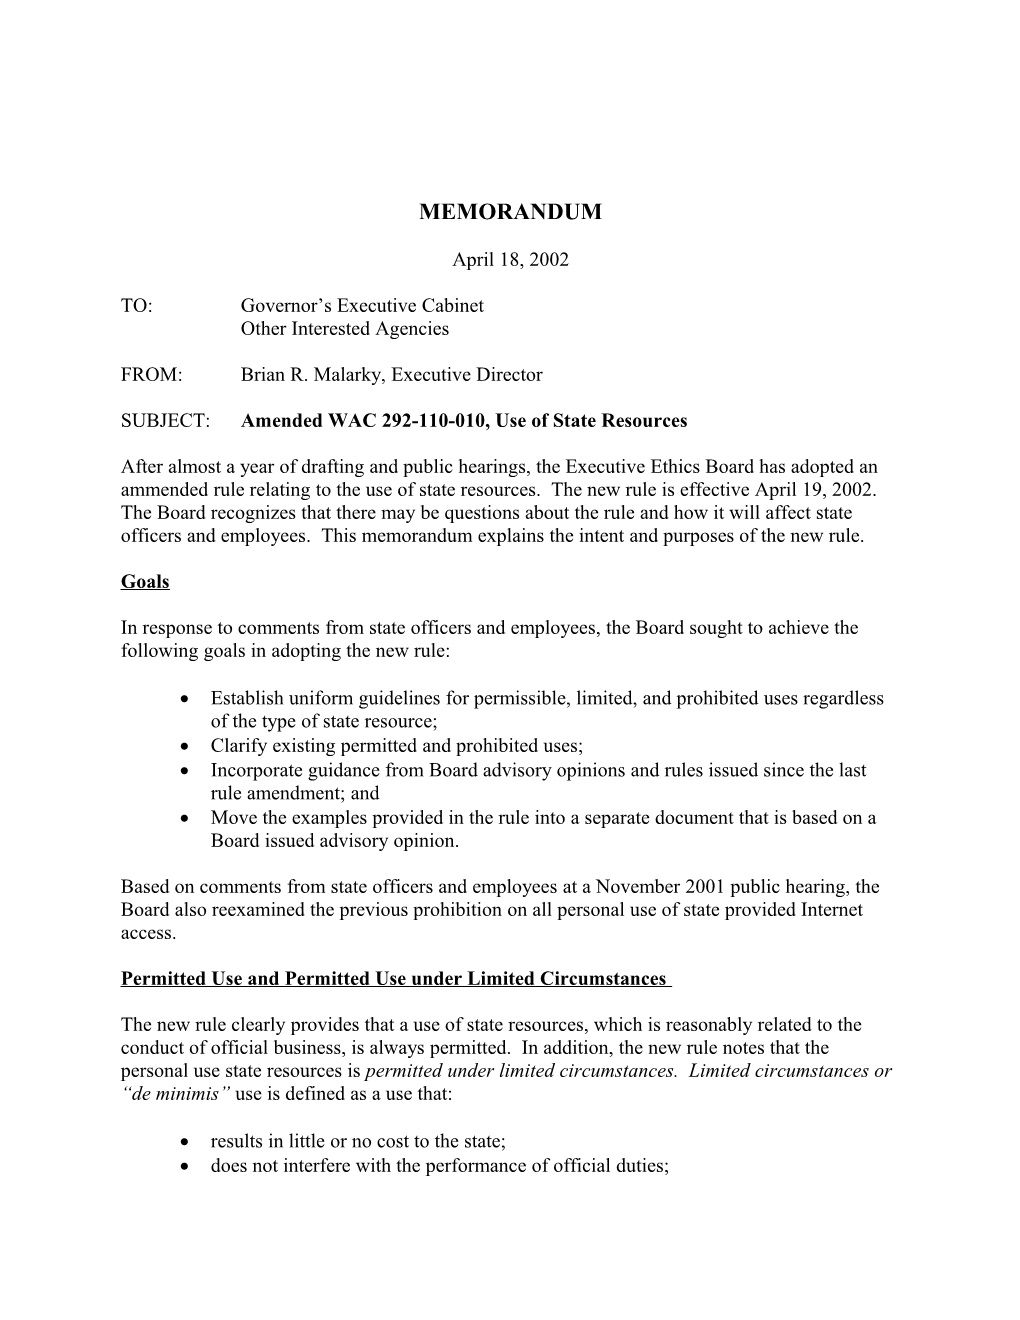 Memorandum to the Governor S Executive Cabinet Regarding WAC 292-110-010